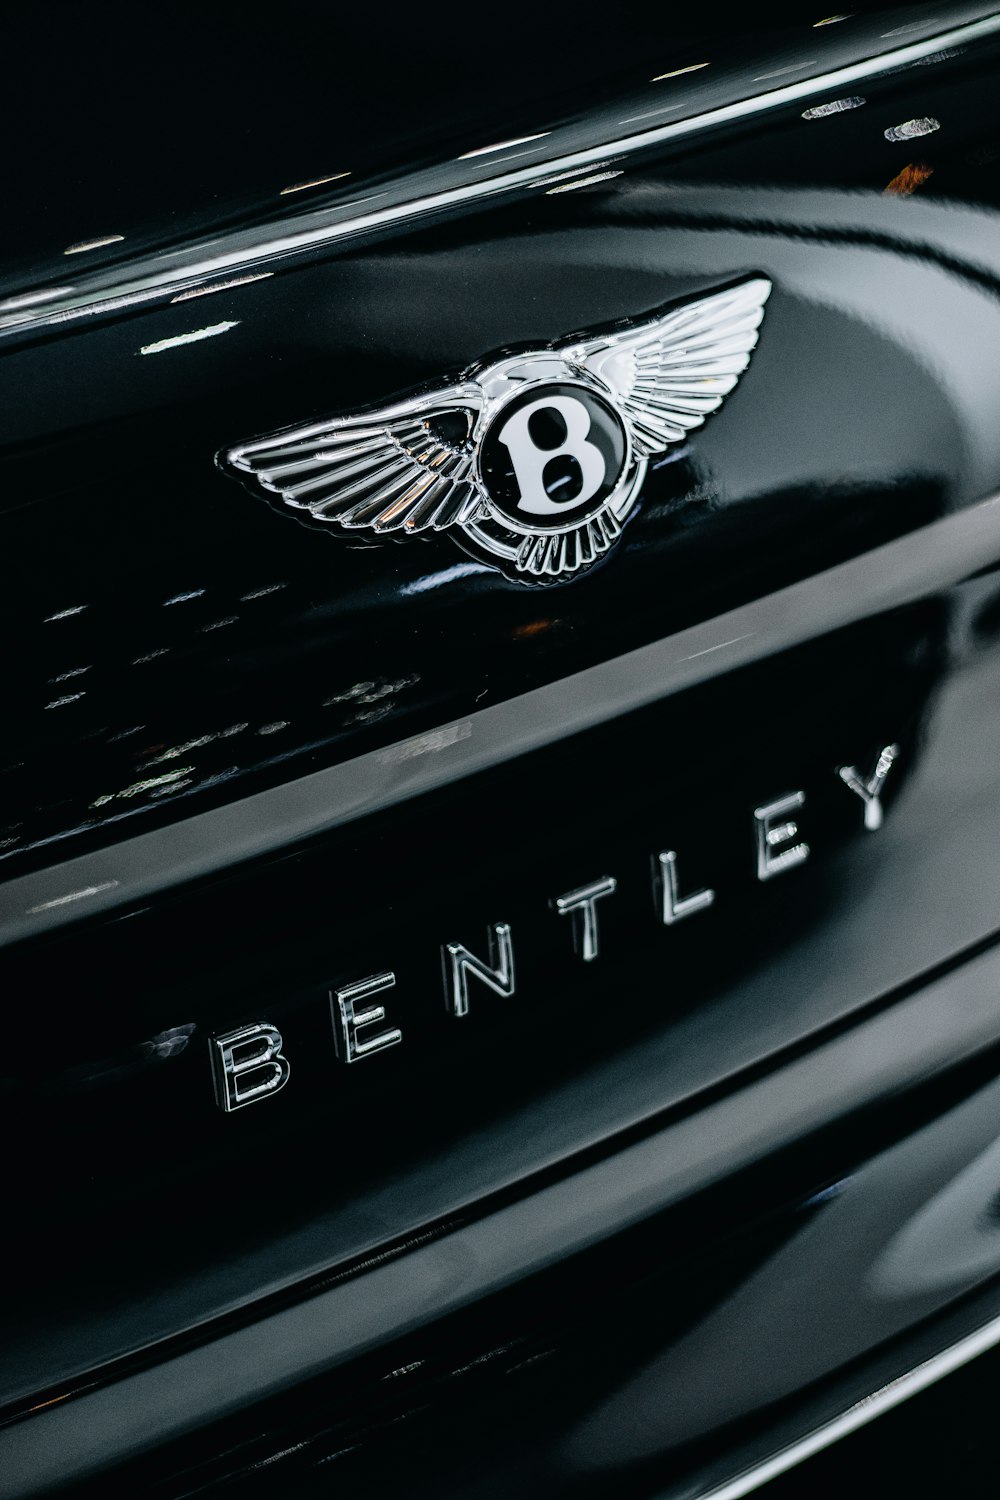 a bentley emblem on the front of a black car